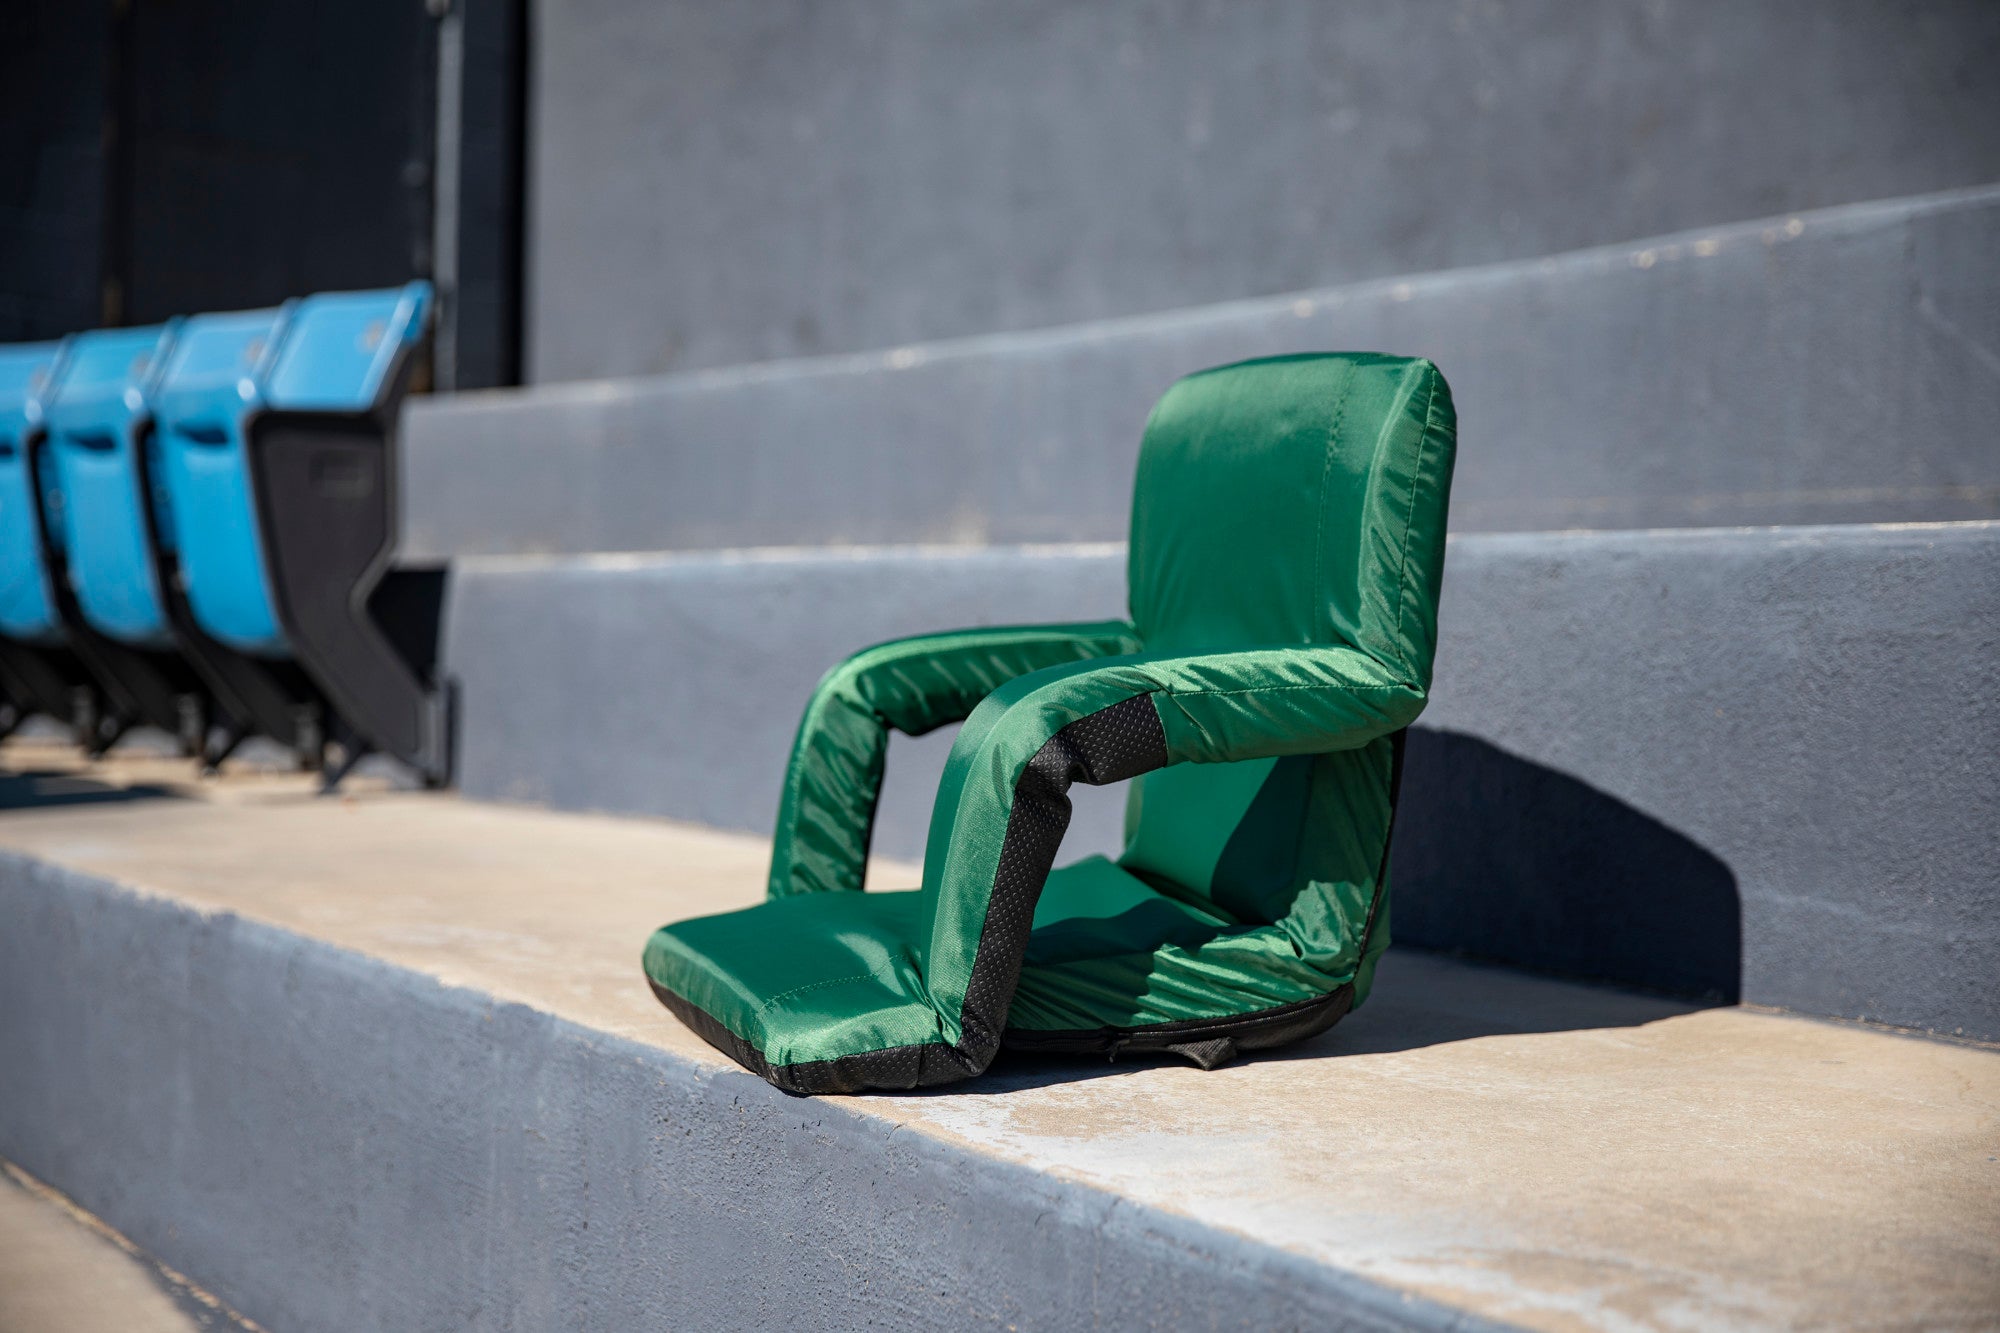 Ventura Portable Reclining Stadium Seat